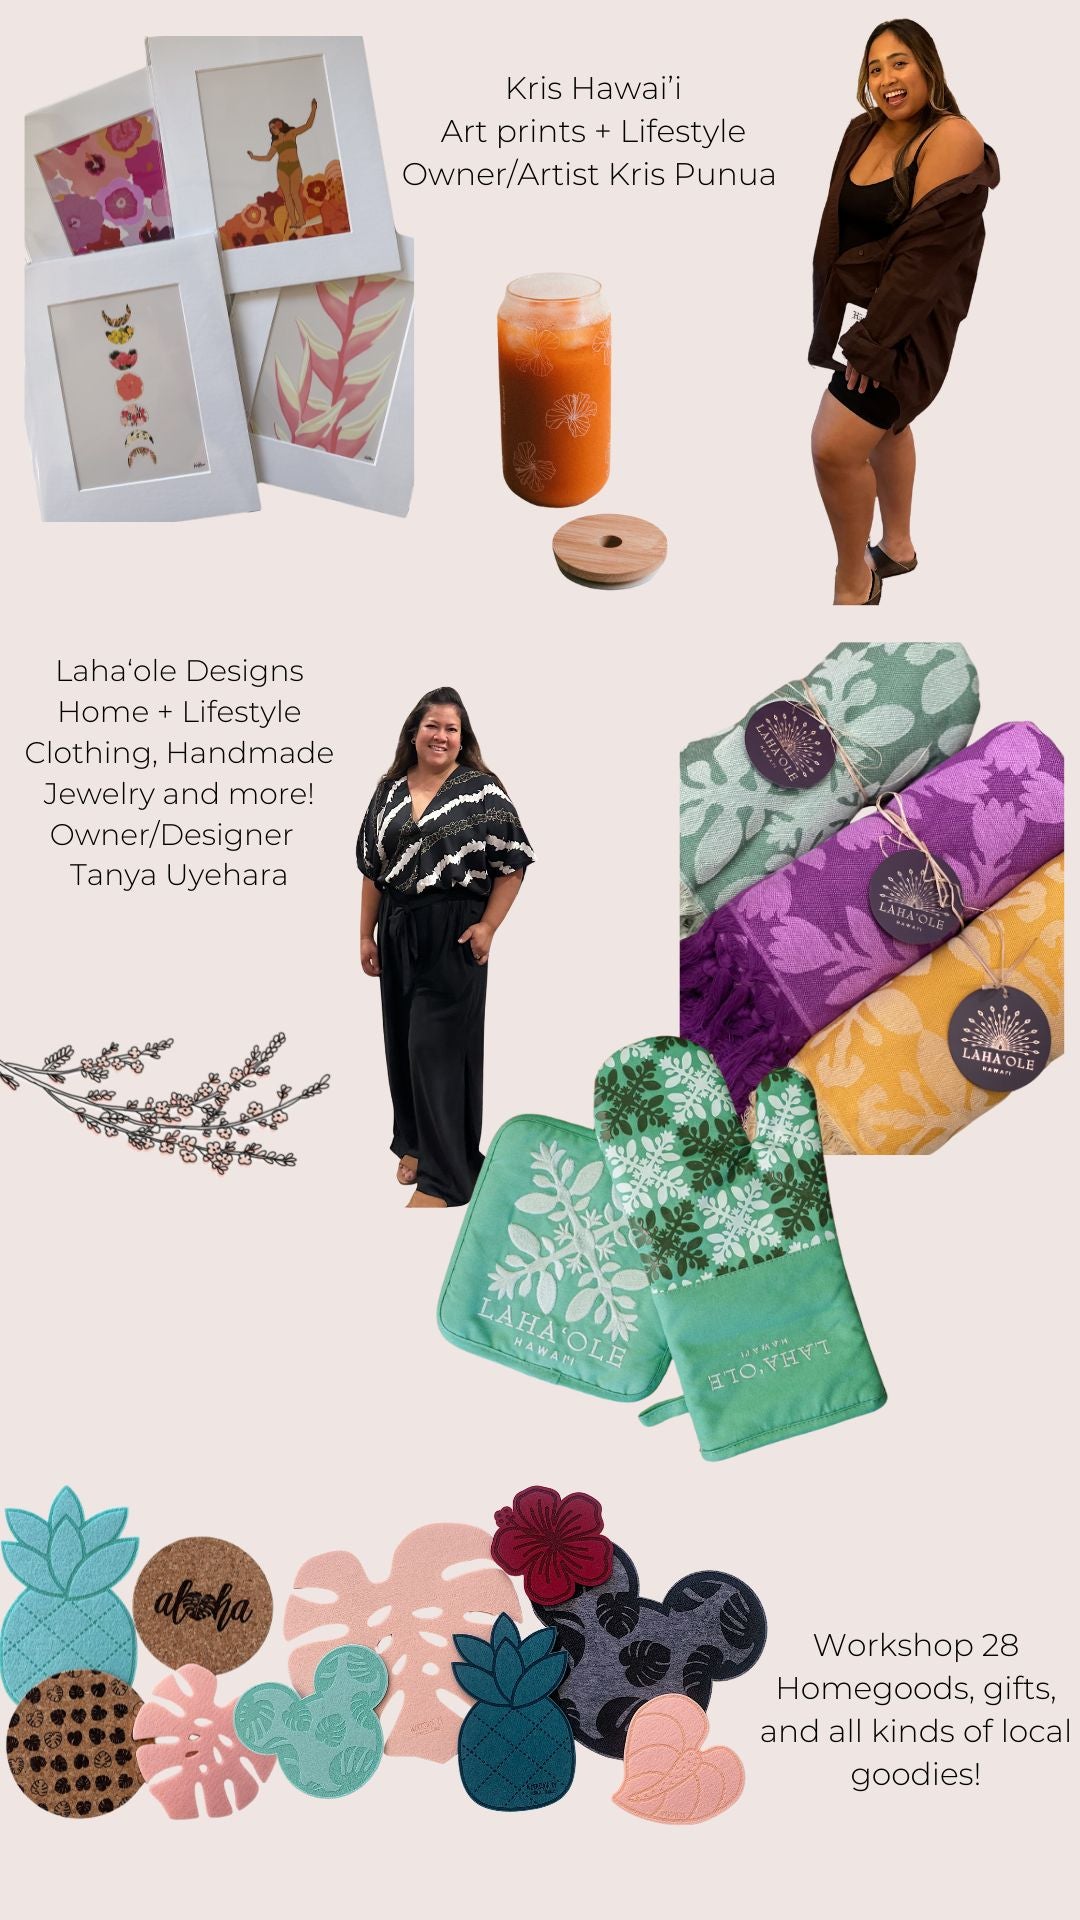 Hawaii home items featuring Kris Hawaii, Laha‘ole Designs and Workshop 28